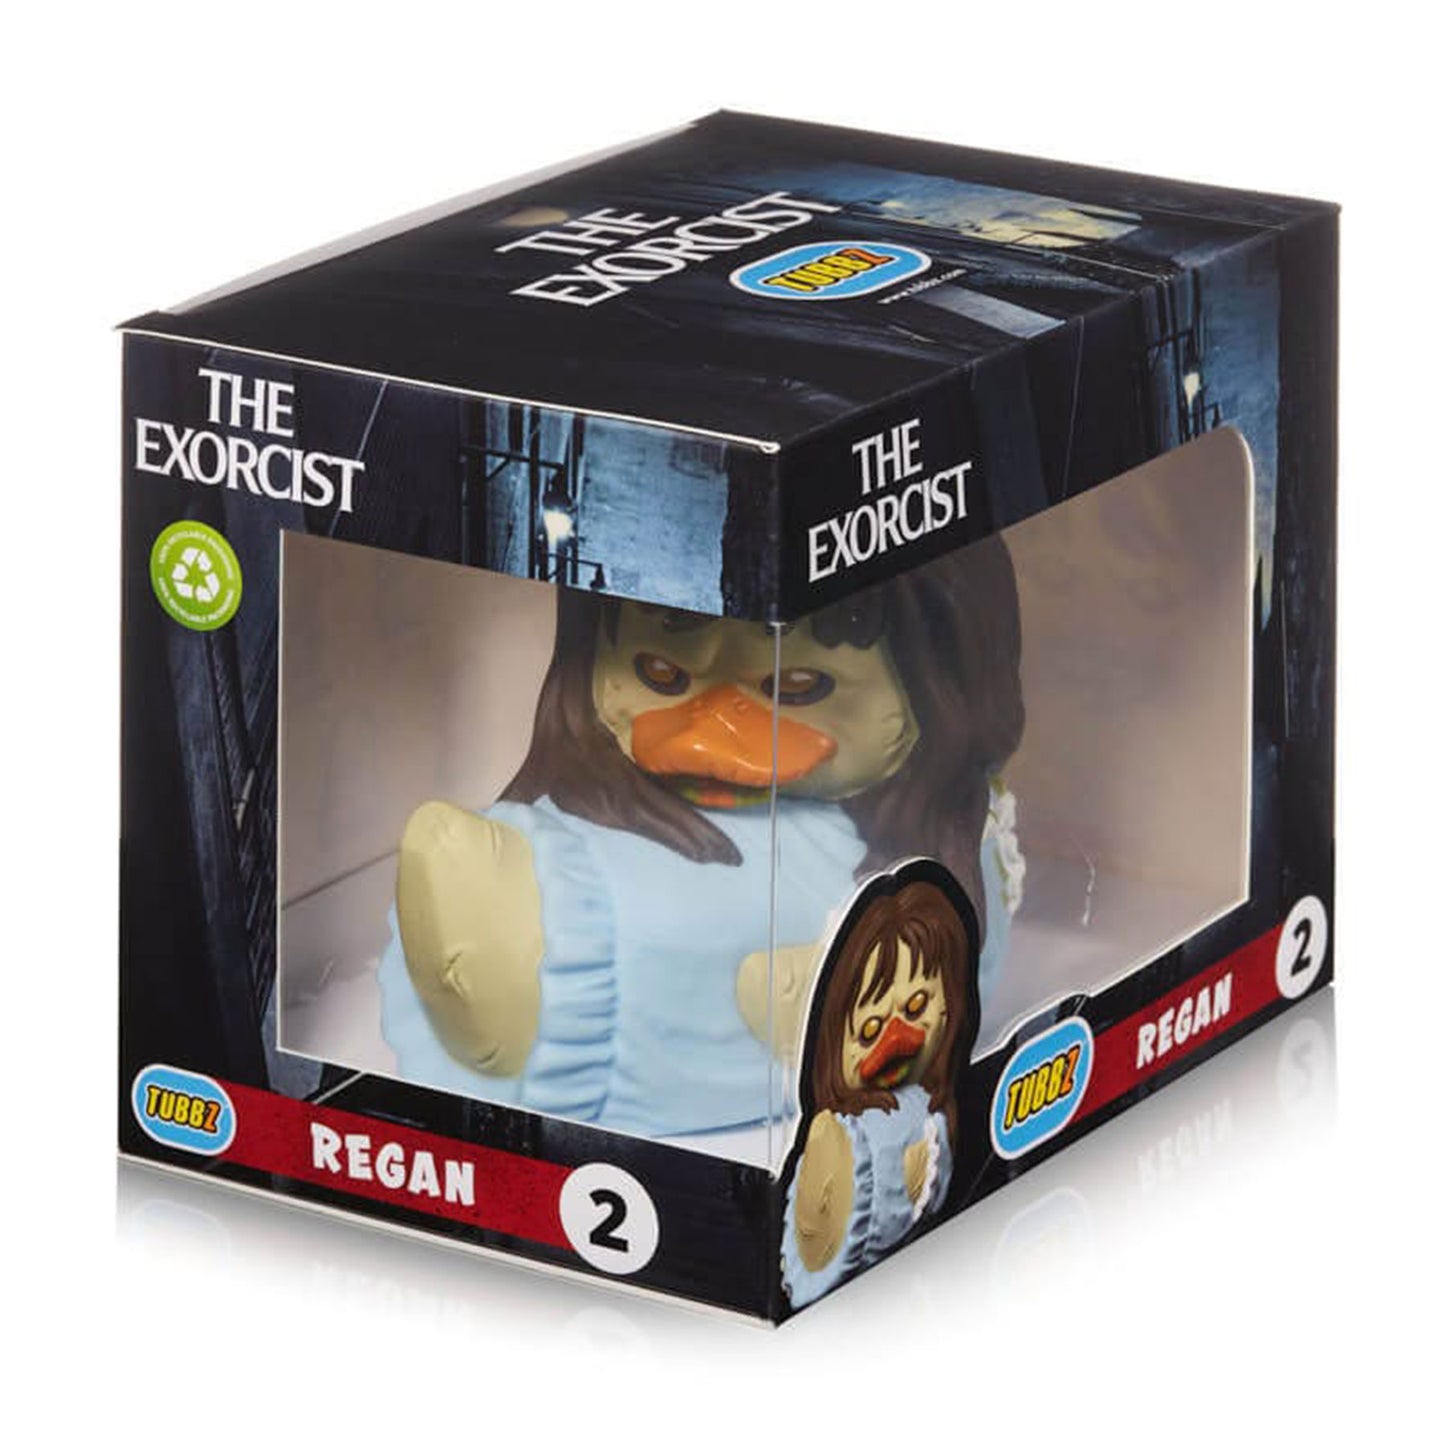 TUBBZ The Exorcist Regan Rubber Duck (Boxed Edition)